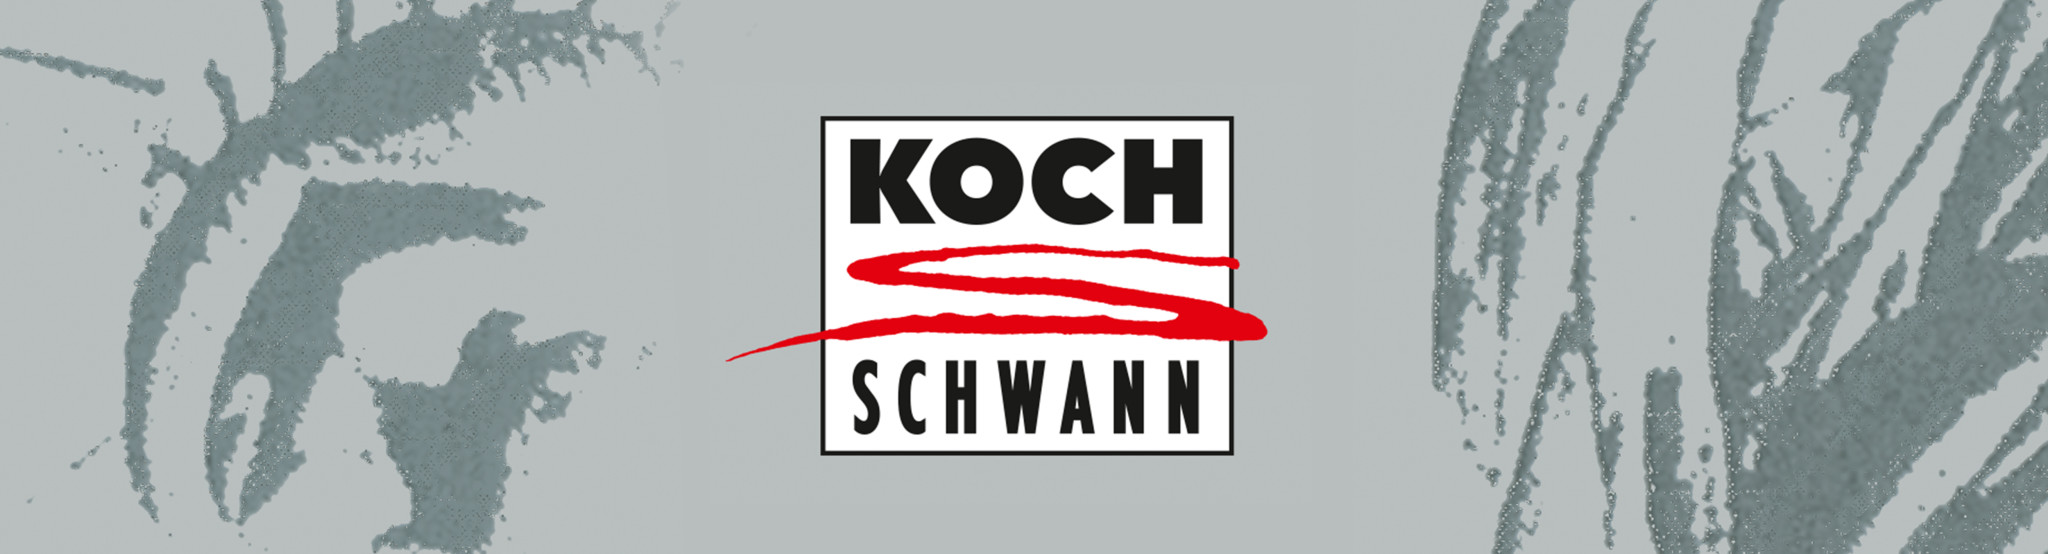 Koch Schwann Hero Banner